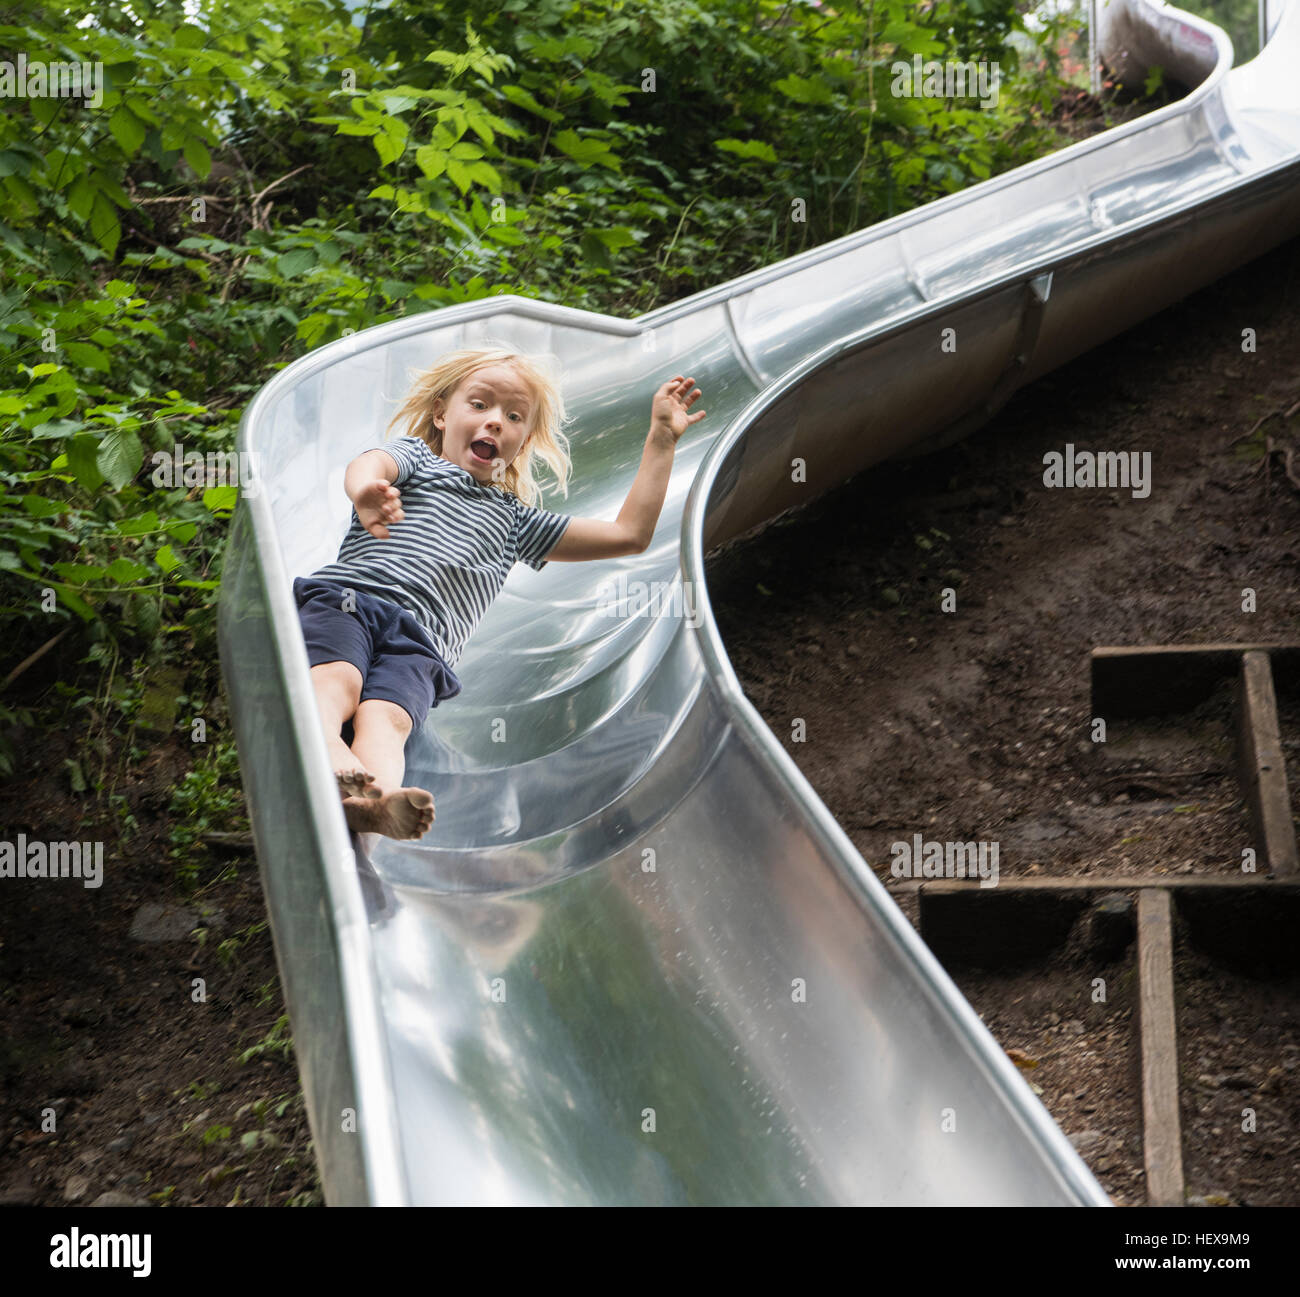 Boy sliding down playground slide Stock Photo